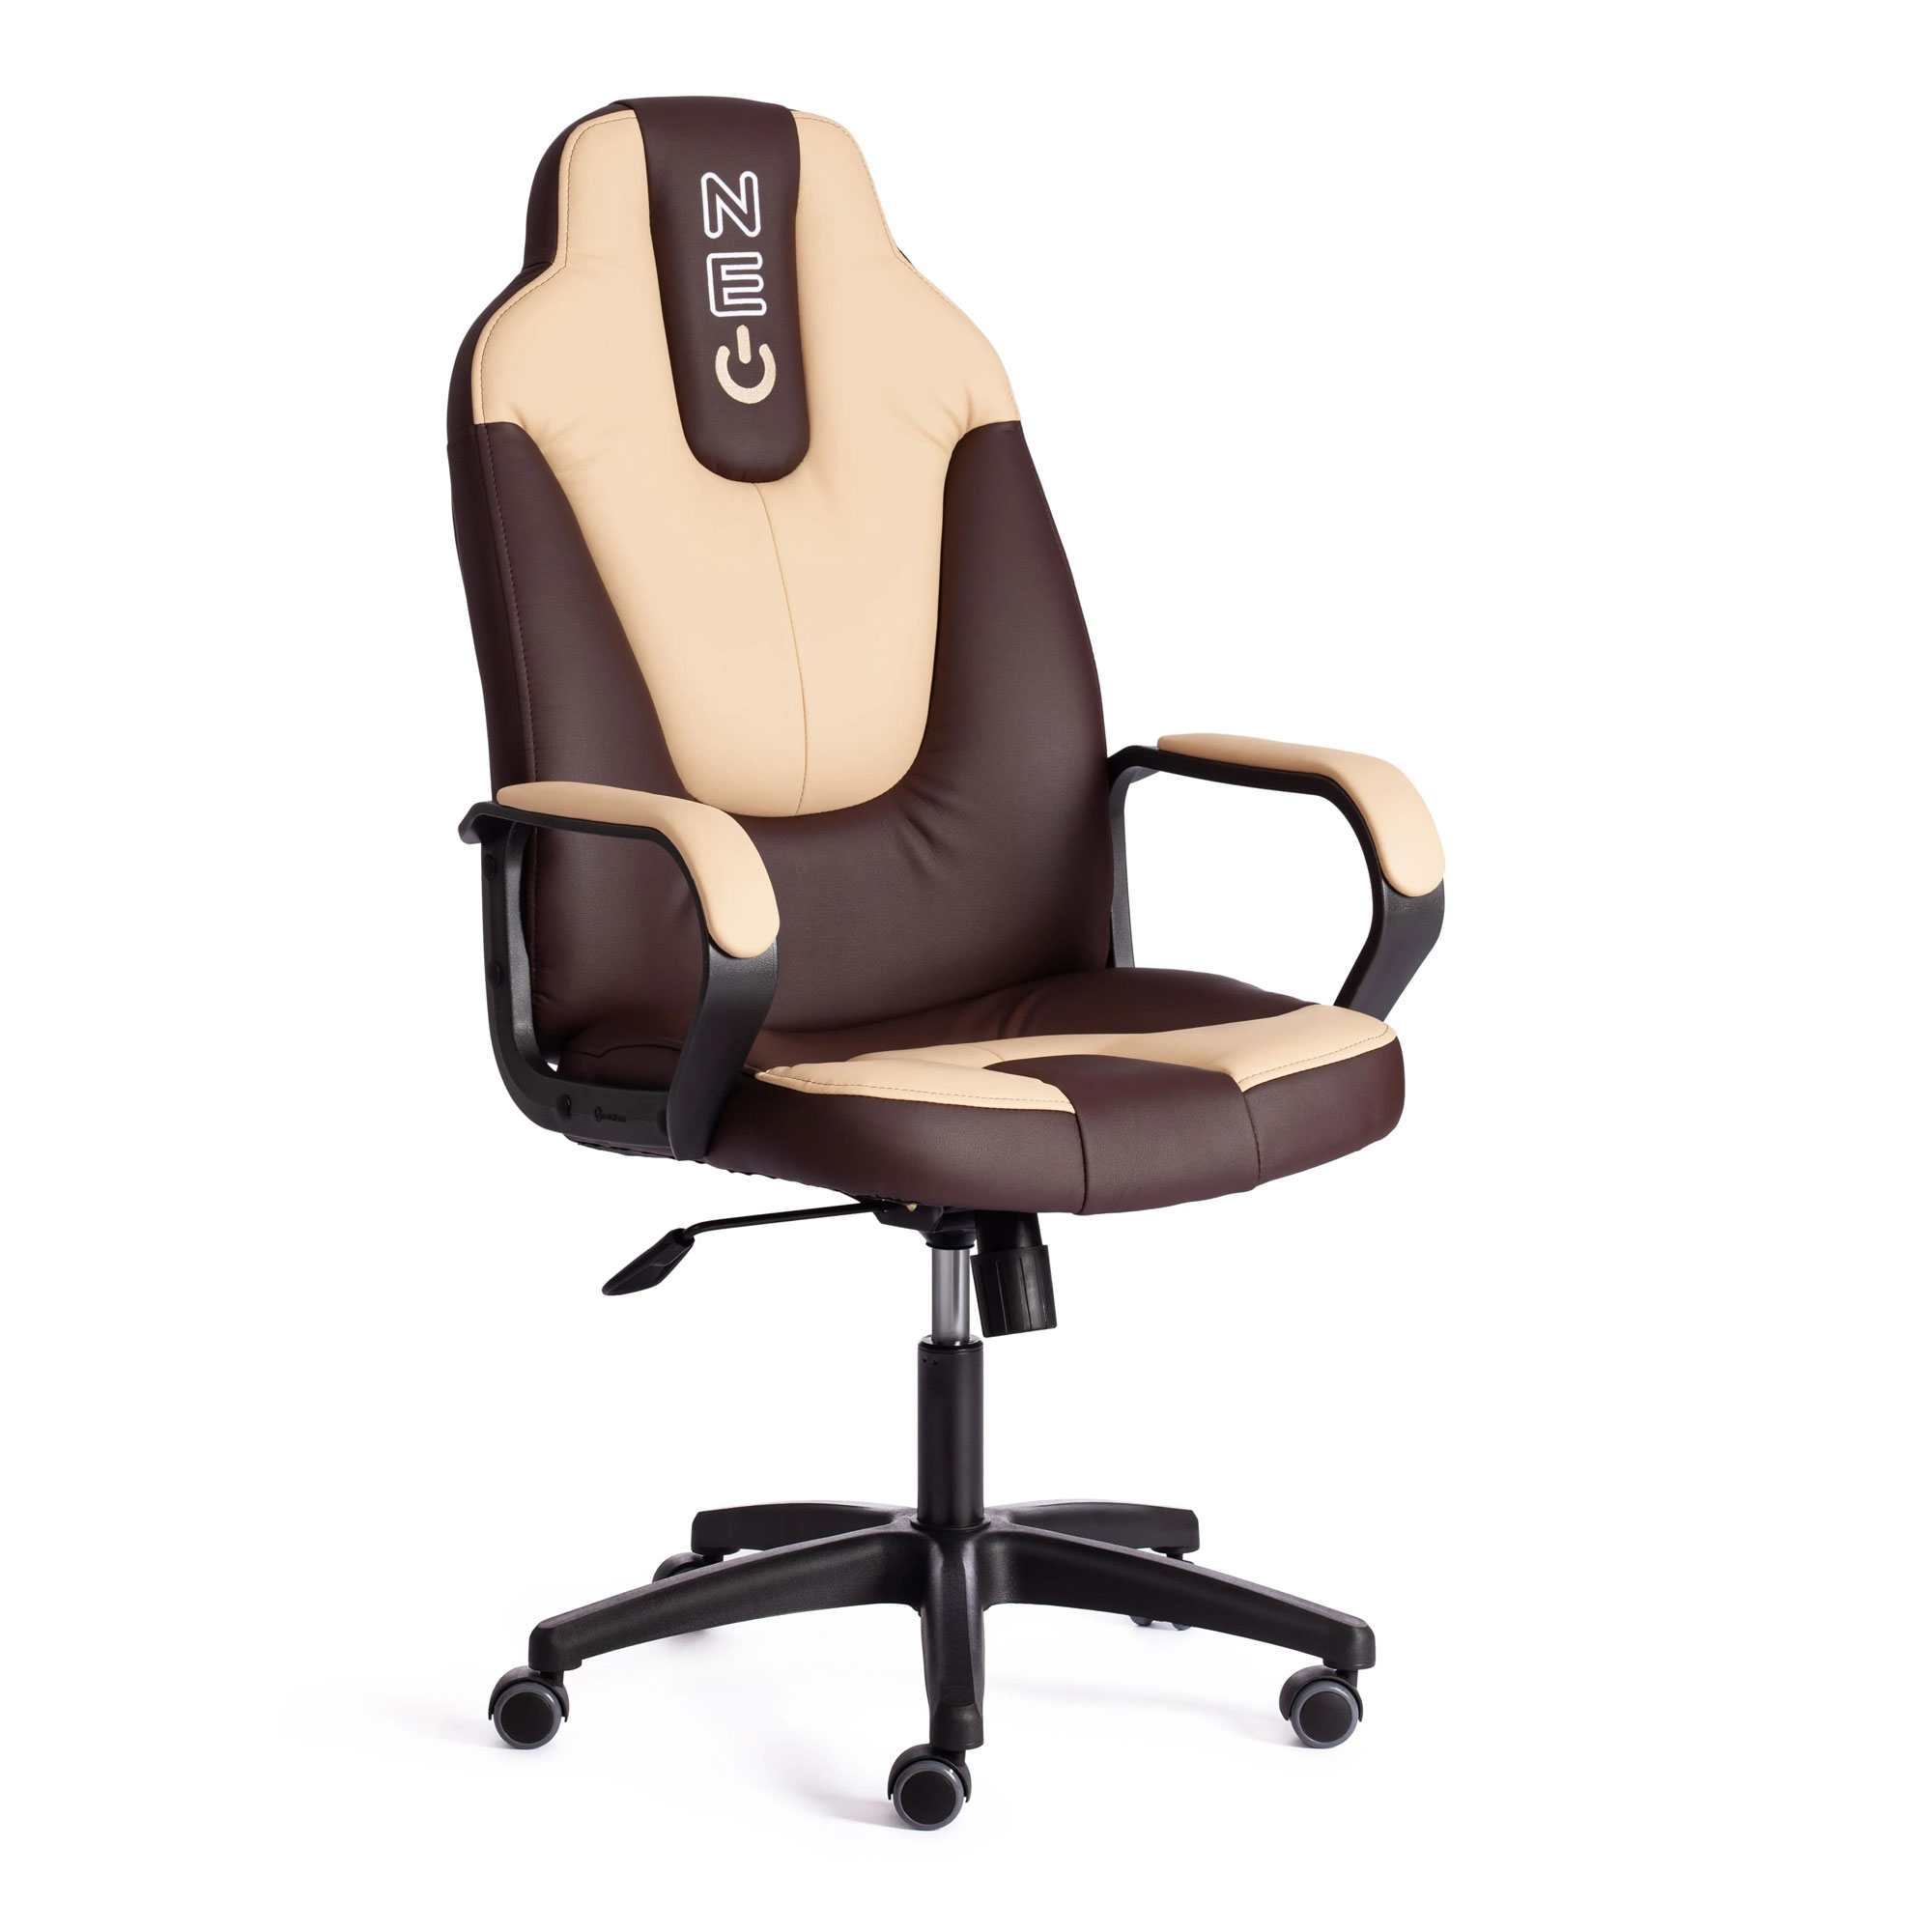 Кресло компьютерное TC Neo искусственная кожа коричневое с бежевым 64х49х122 см кресло компьютерное tc neo искусственная кожа чёрное с красным 64х49х122 см